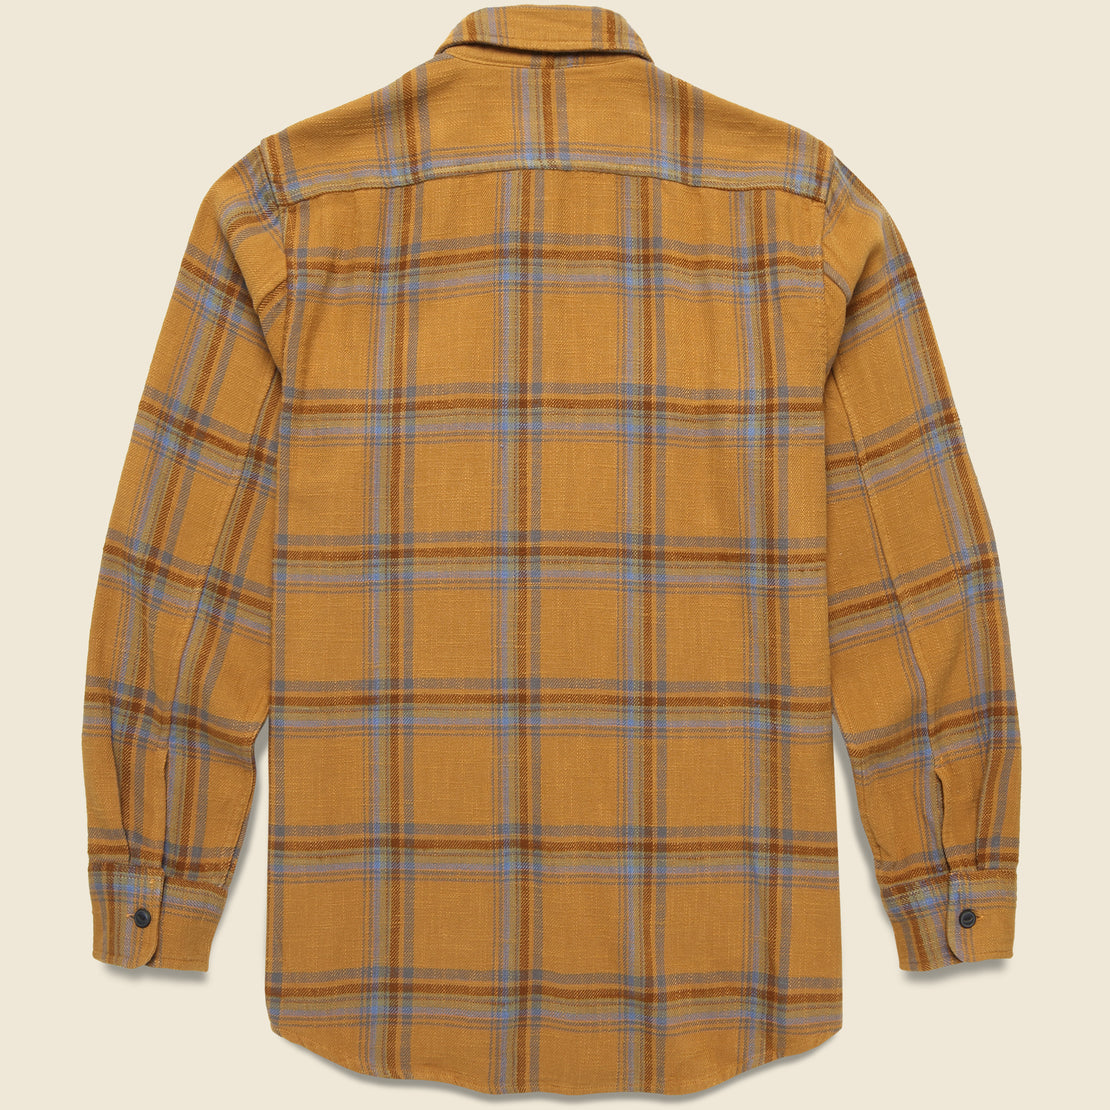 Vintage Slub Twill Shirt - Golden Brown/Blue - Grayers - STAG Provisions - Tops - L/S Woven - Plaid